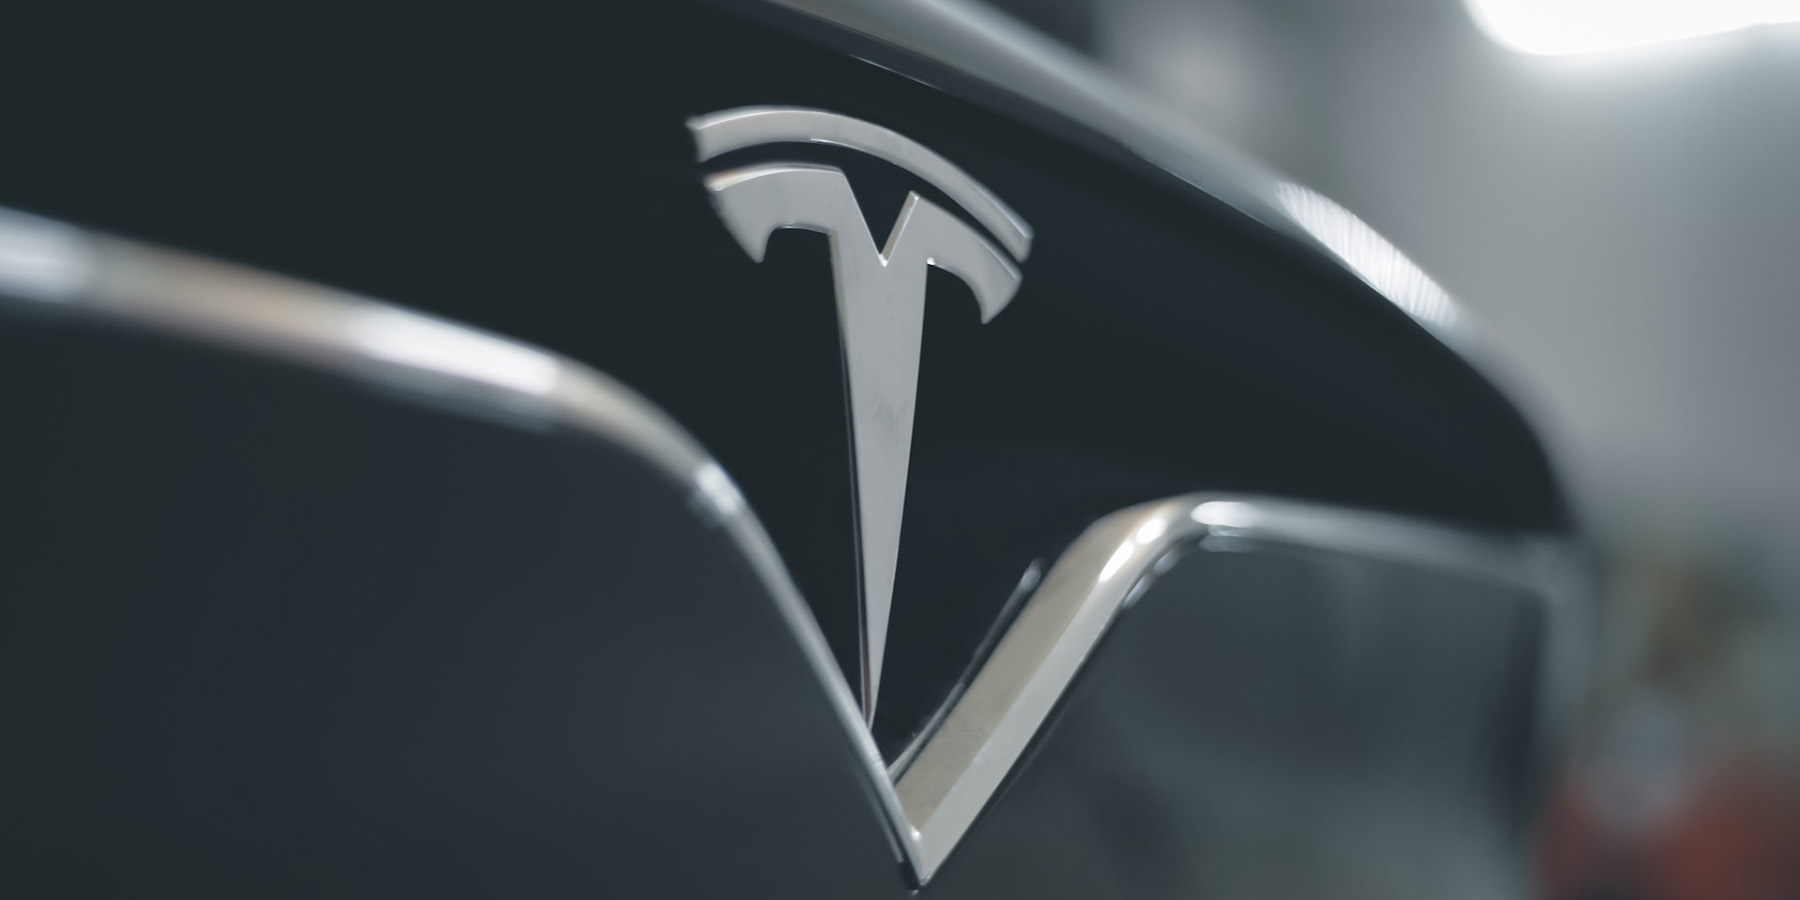 Product Strategy of Tesla